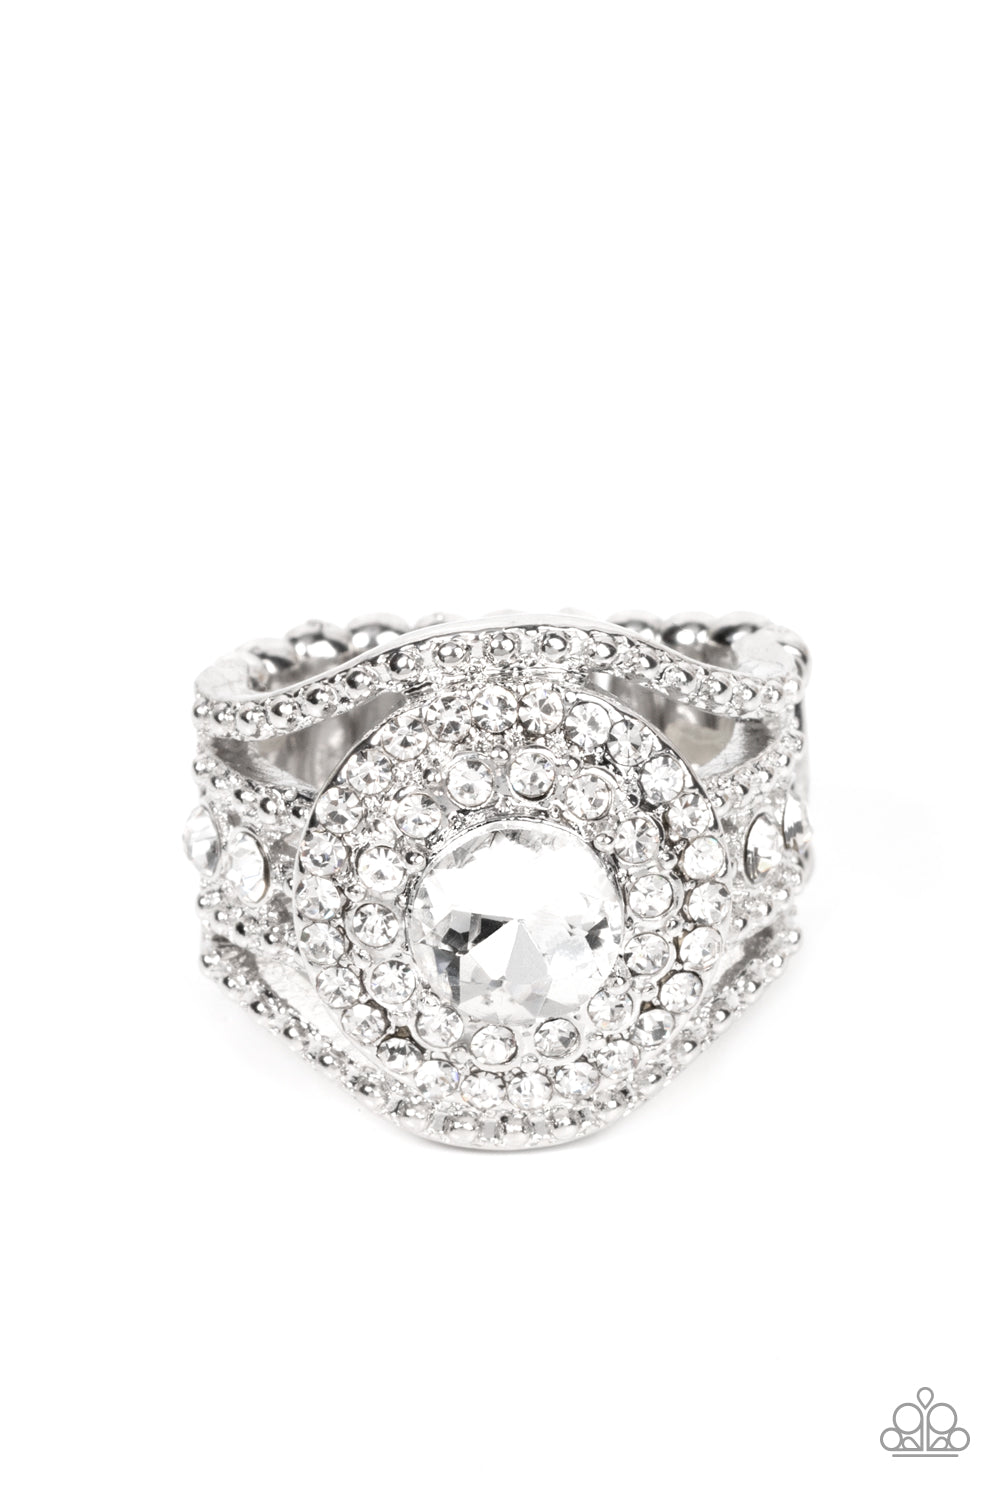 Paparazzi Understated Drama - White Ring - A Finishing Touch Jewelry